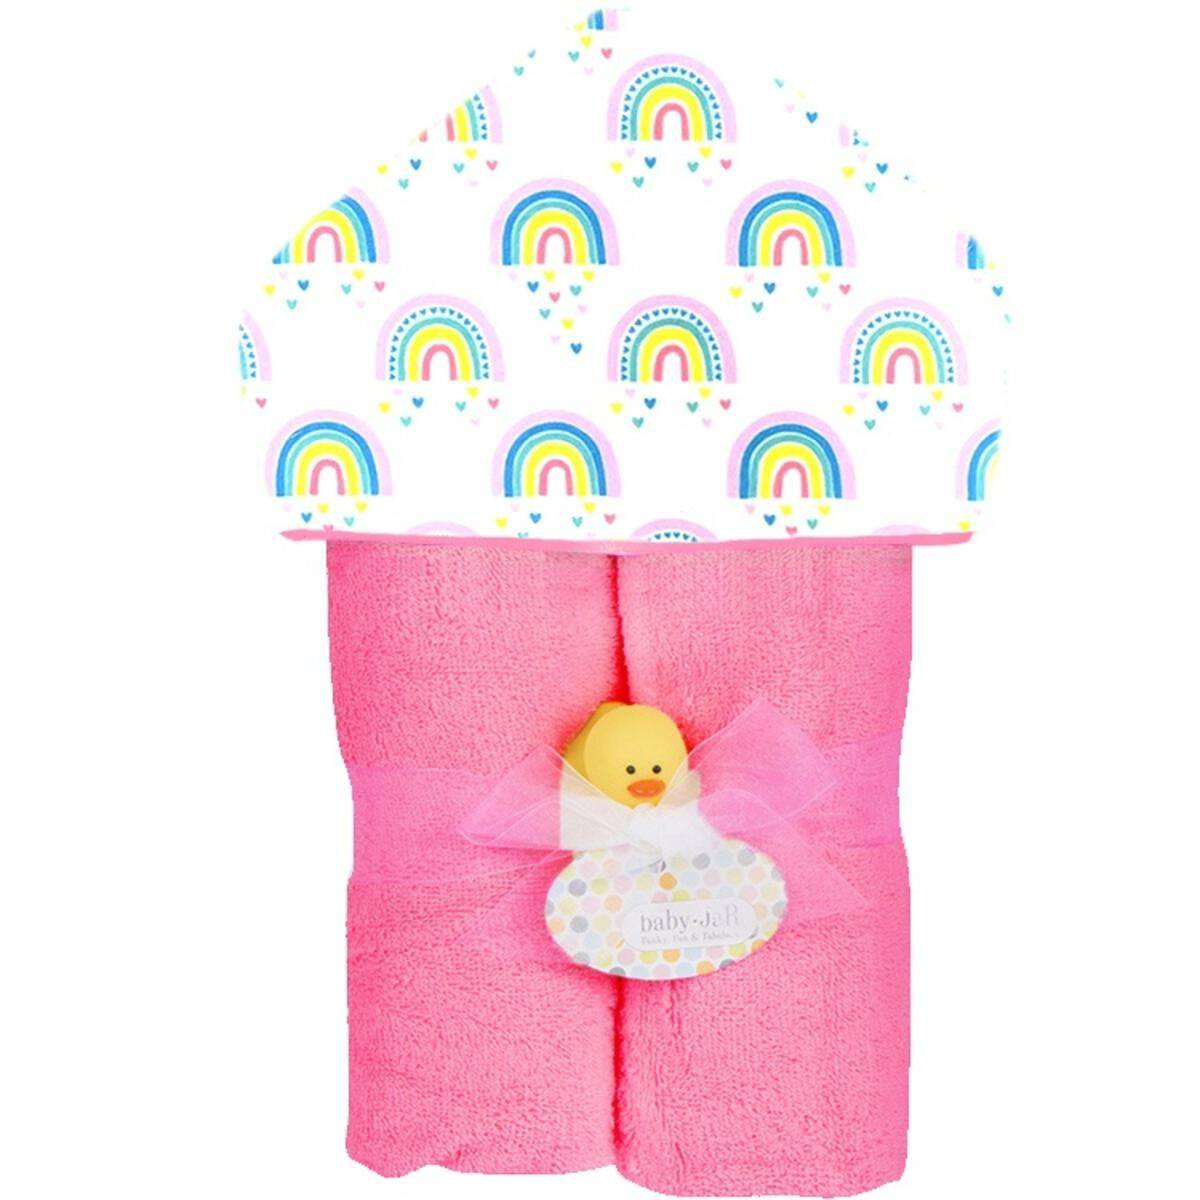 Chasing Rainbows Plush Deluxe Hooded Towel - Twinkle Twinkle Little One